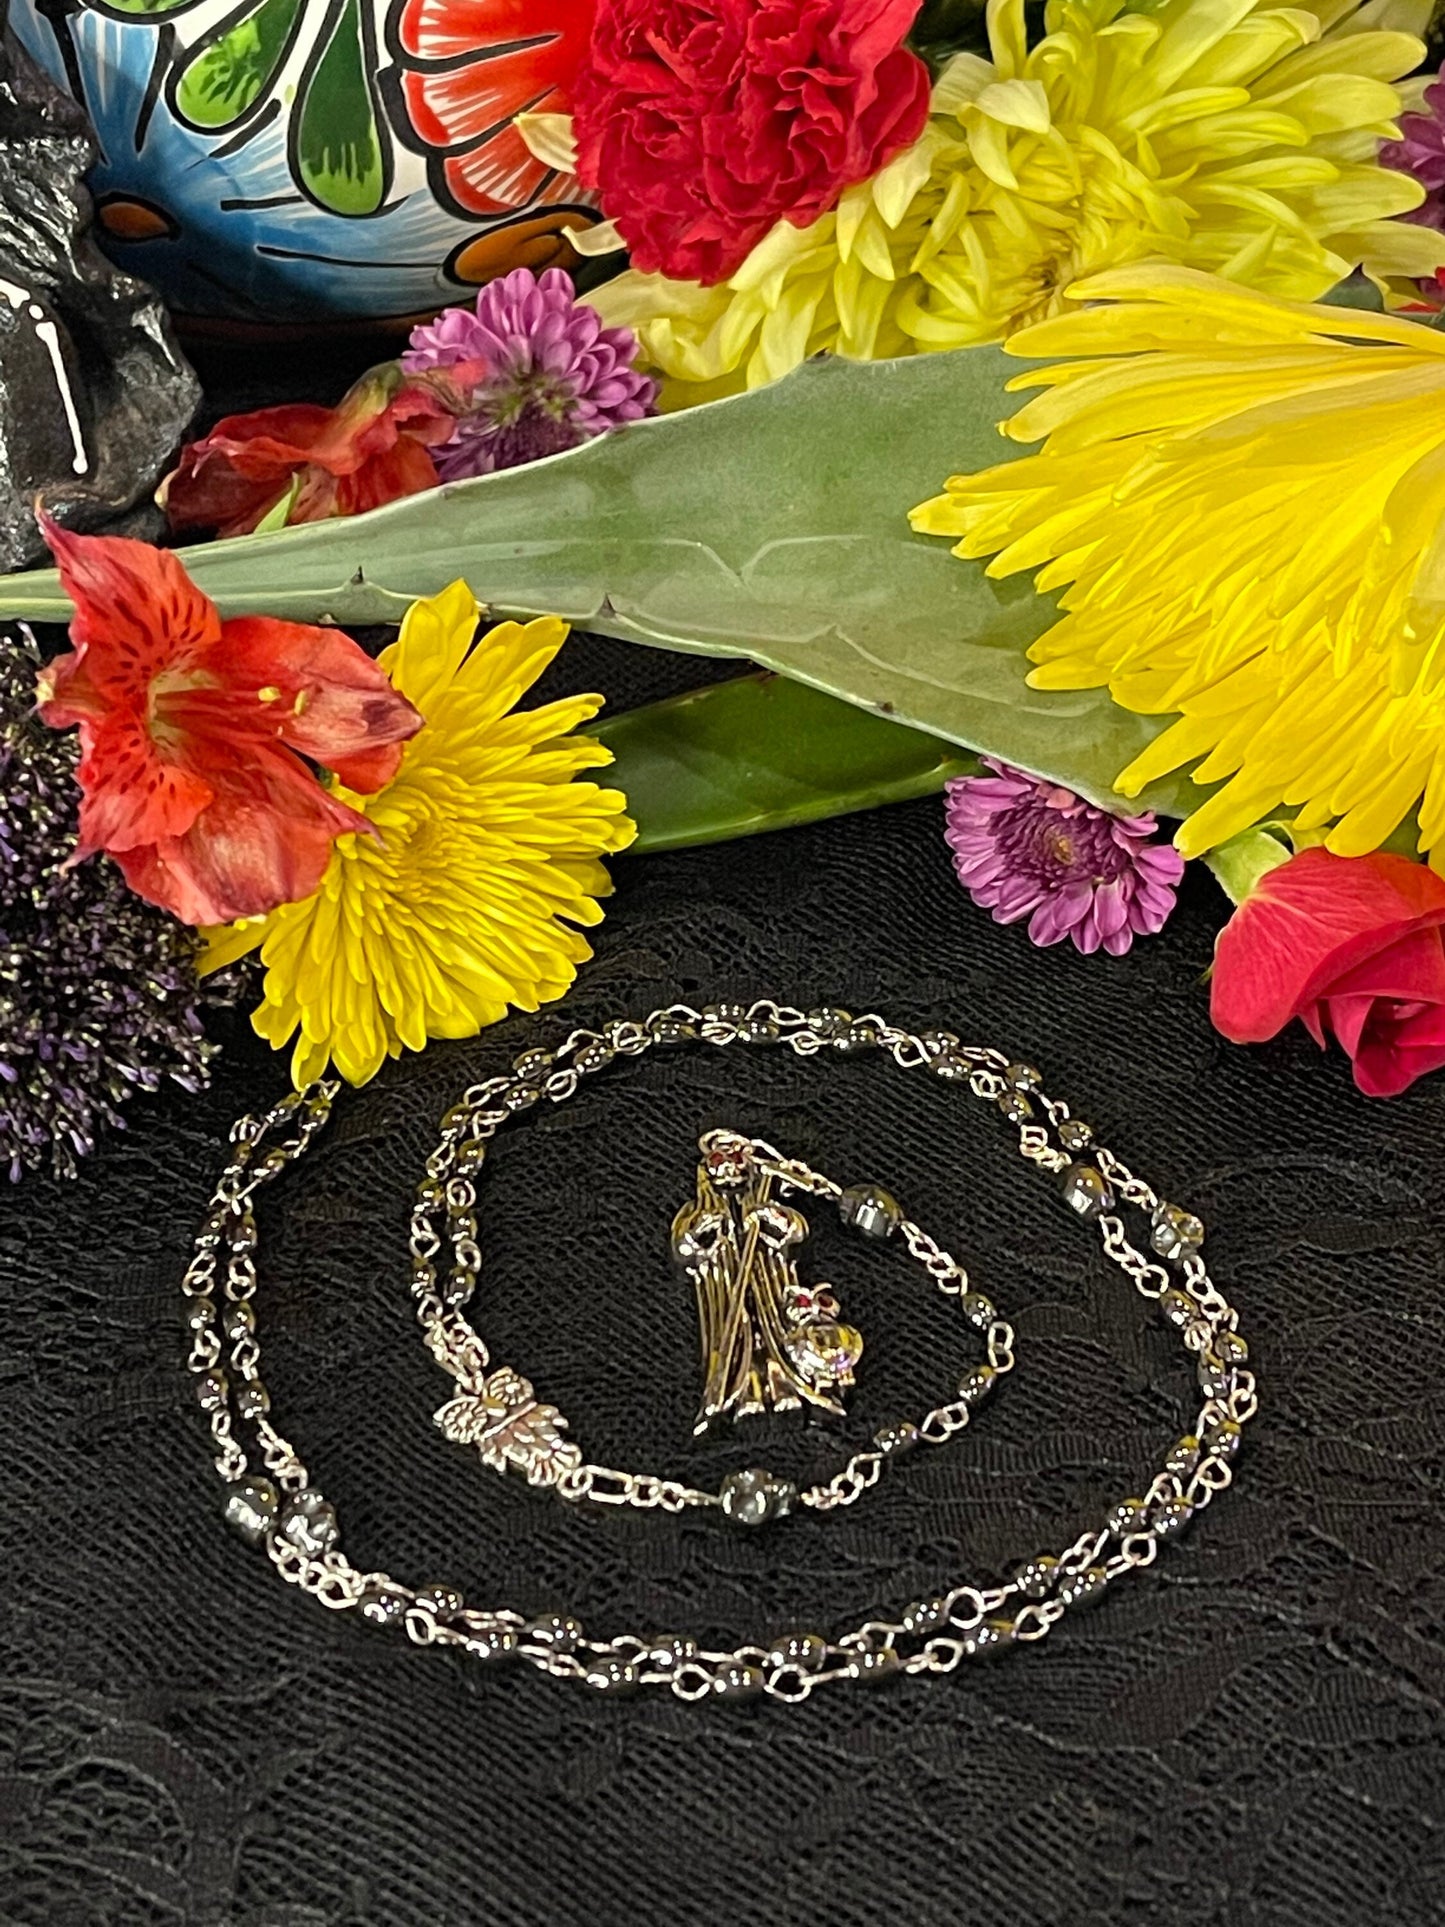 Santa Muerte Negra Hematite Rosary + Sterling Silver Plated Chain + Handcrafted + Gemstone + Rosario